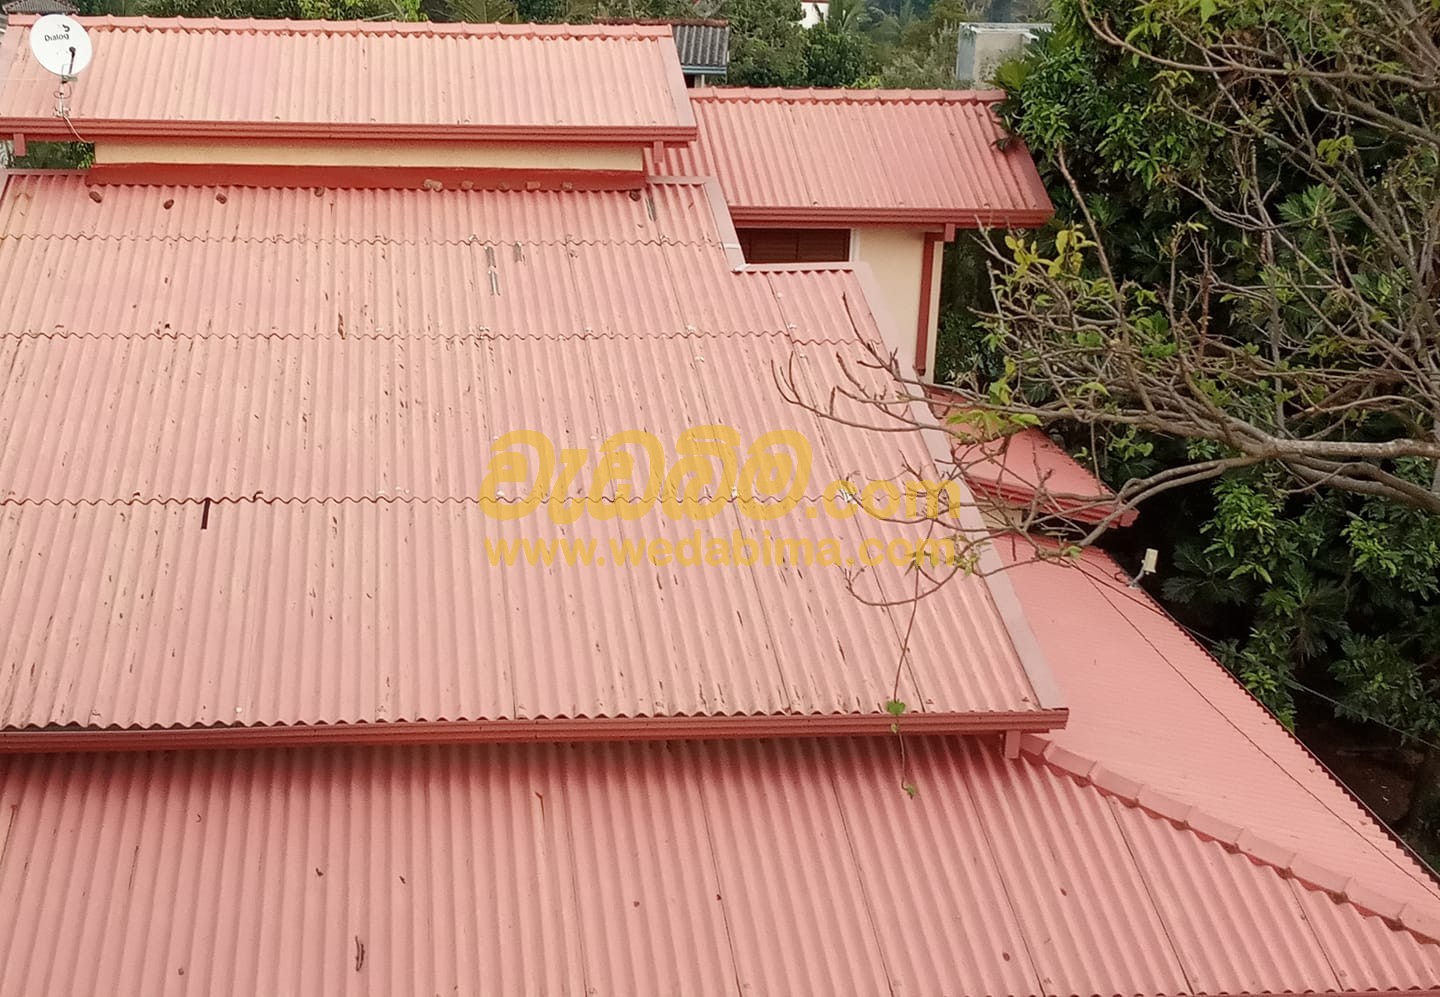 amano roofing sheet price in sri lanka